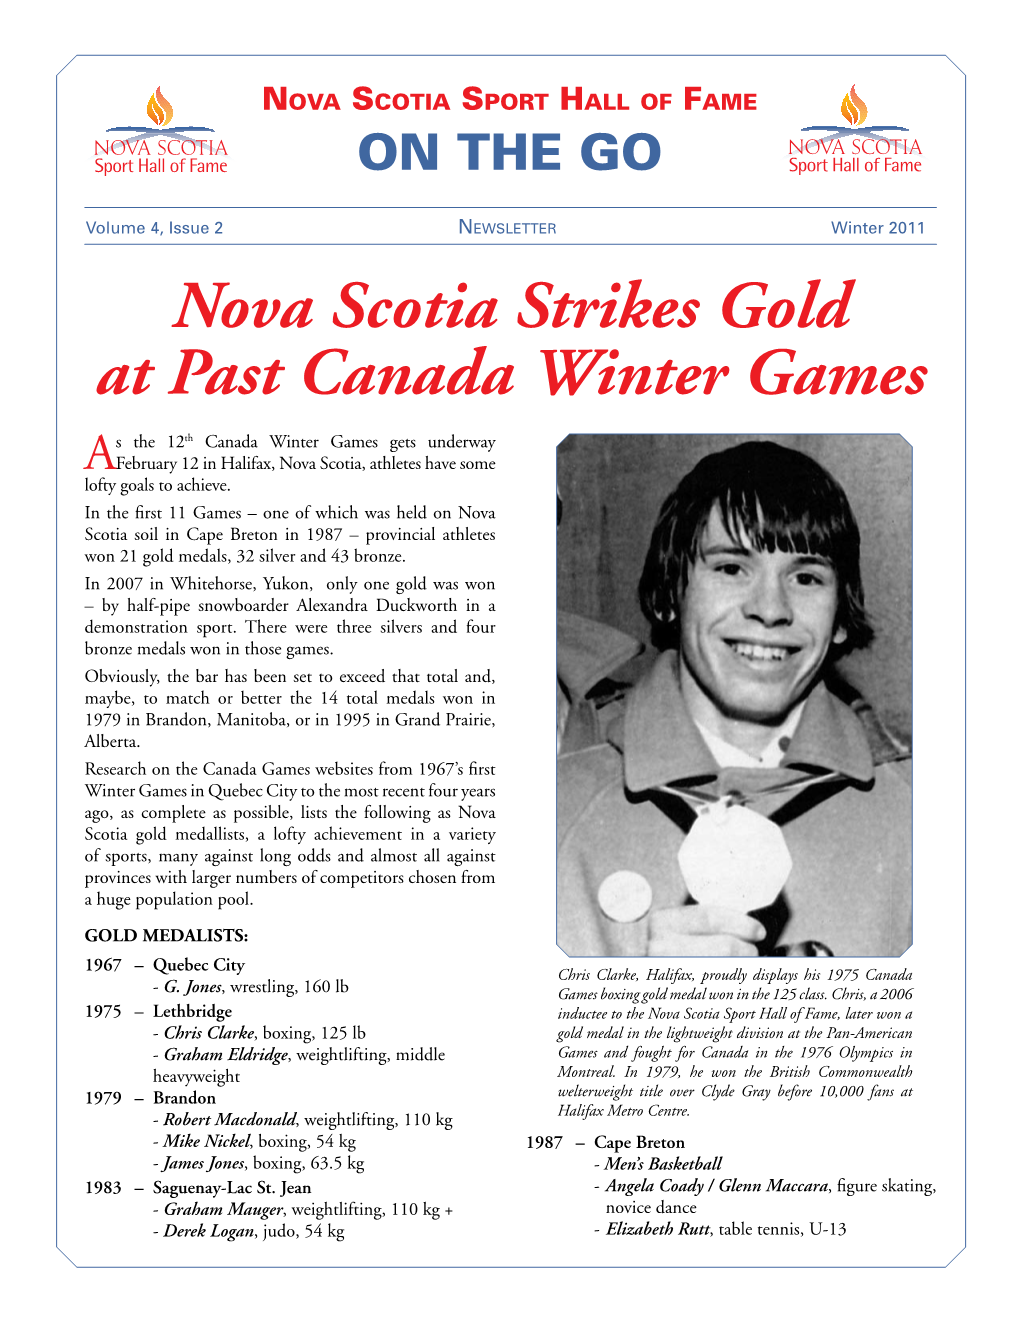 Nova Scotia Strikes Gold at Past Canada Winter Games